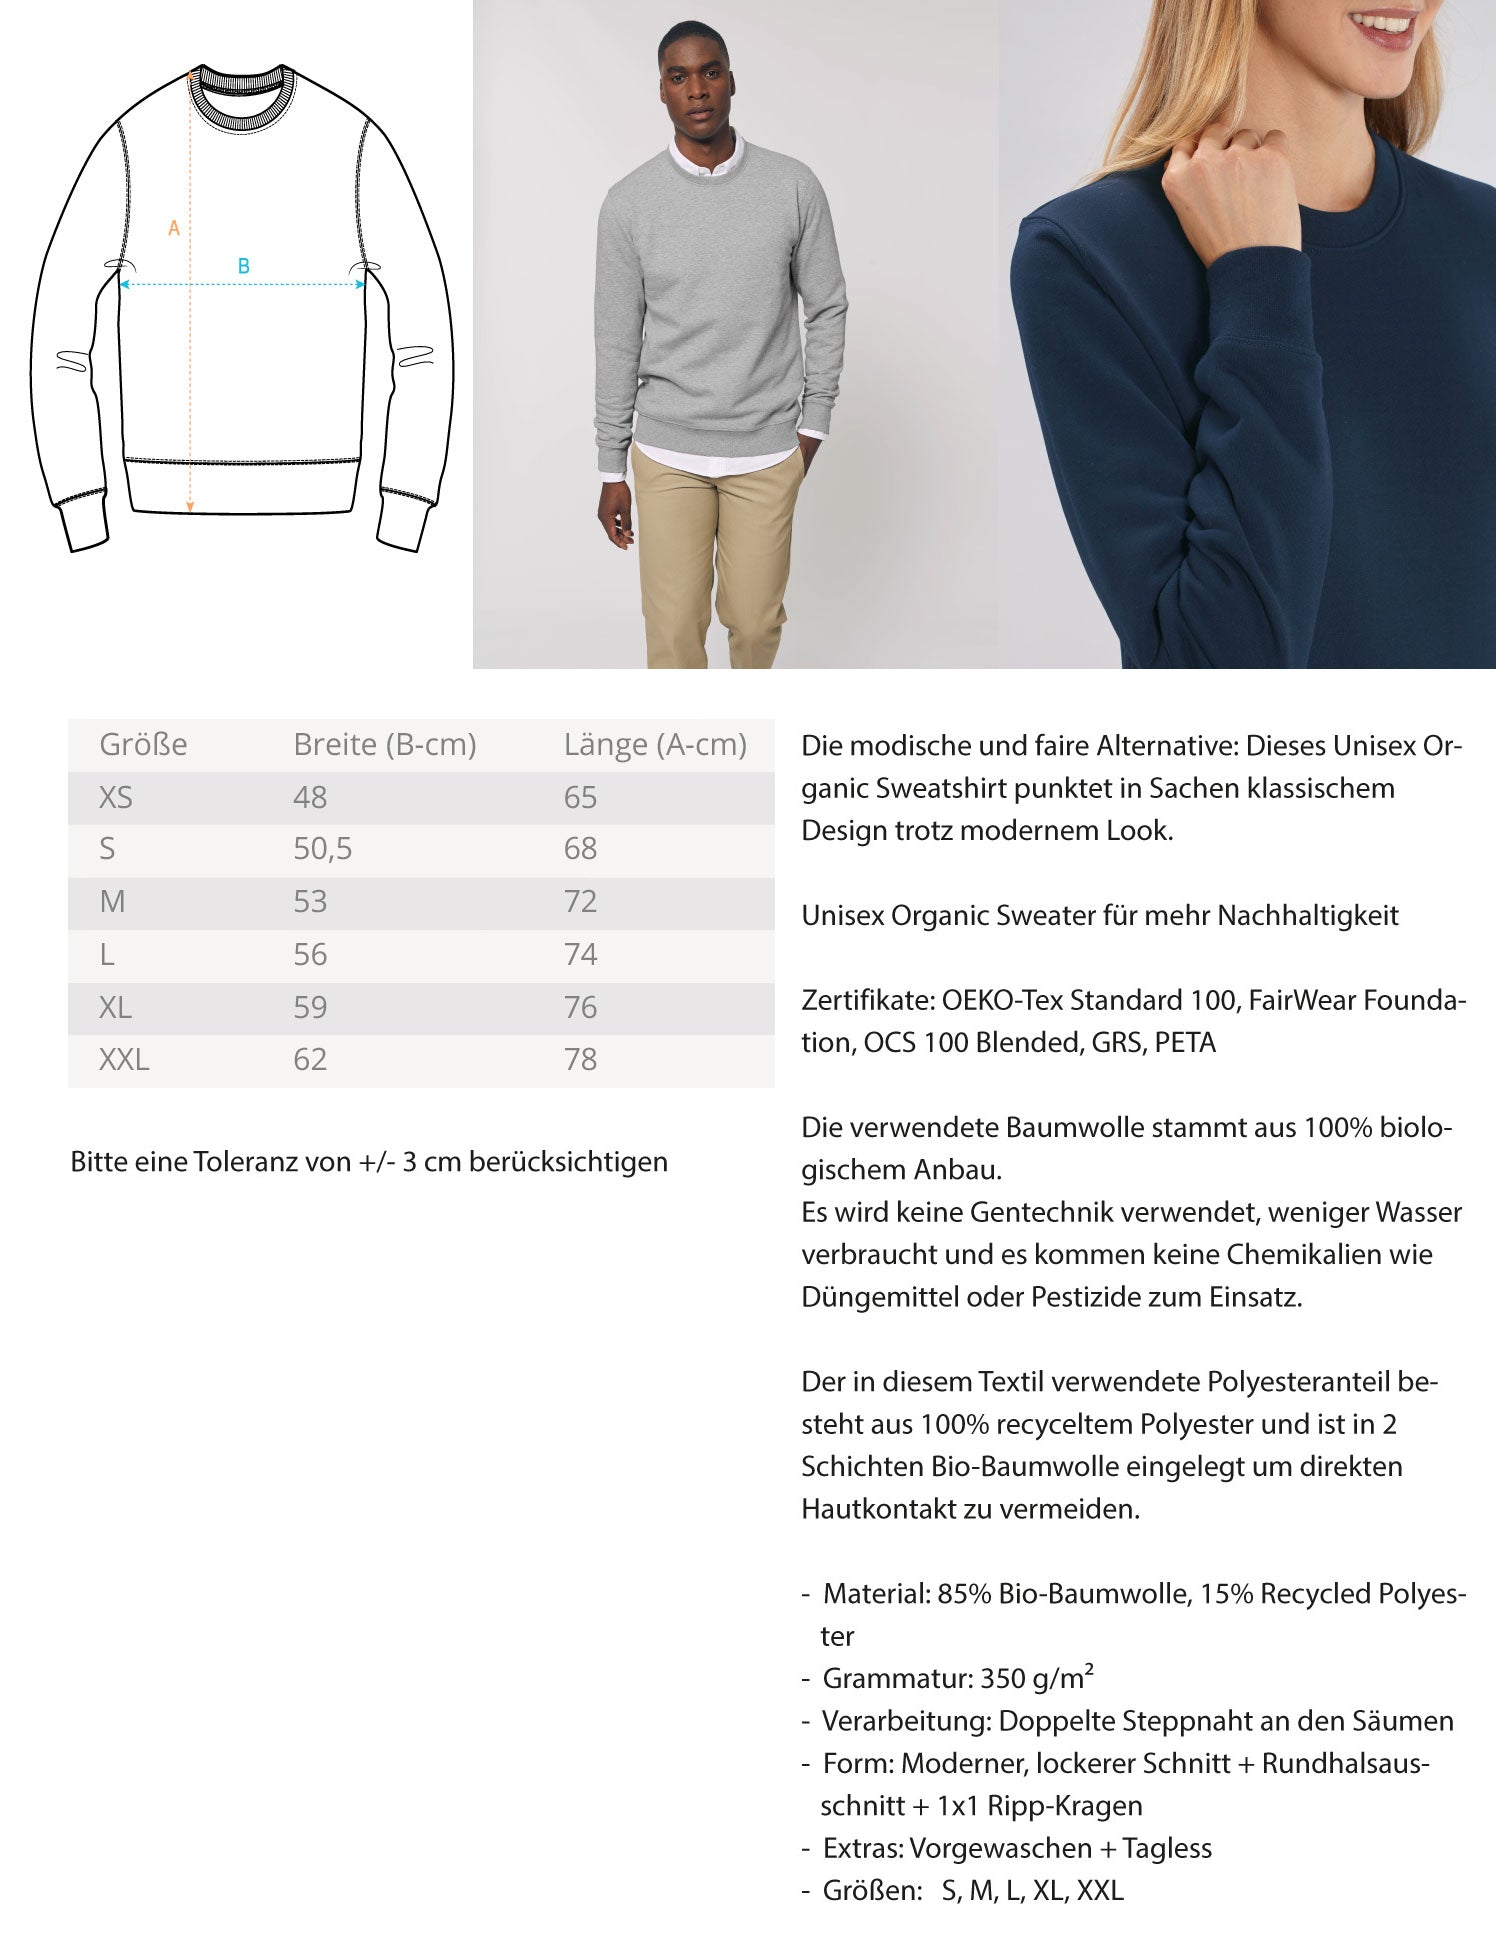 Bio Premium E-Motorroller Sweatshirt: SONS OF ELECTRICITY